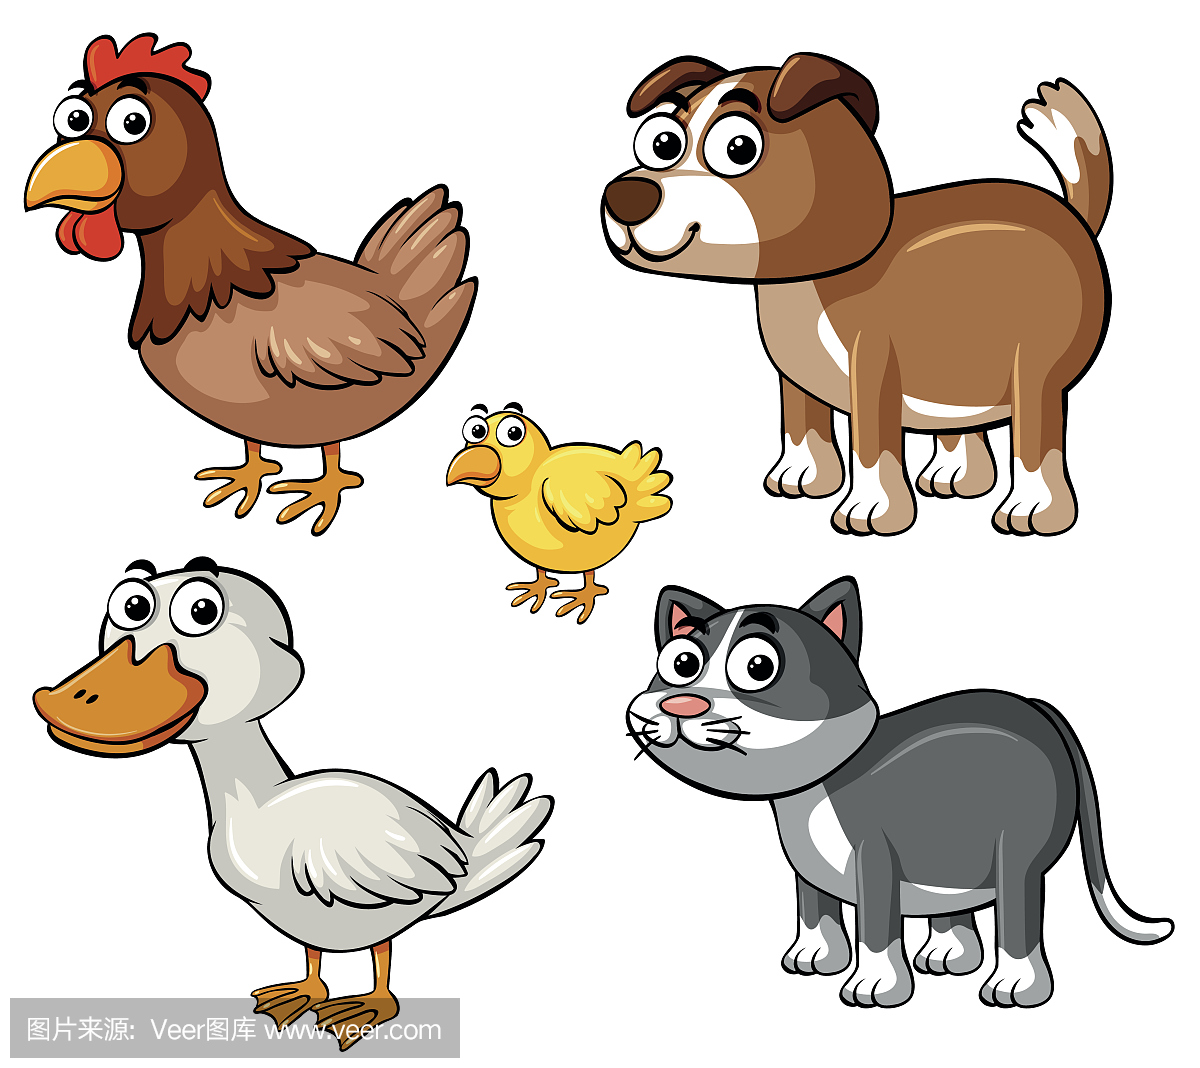 Different types of farm animals